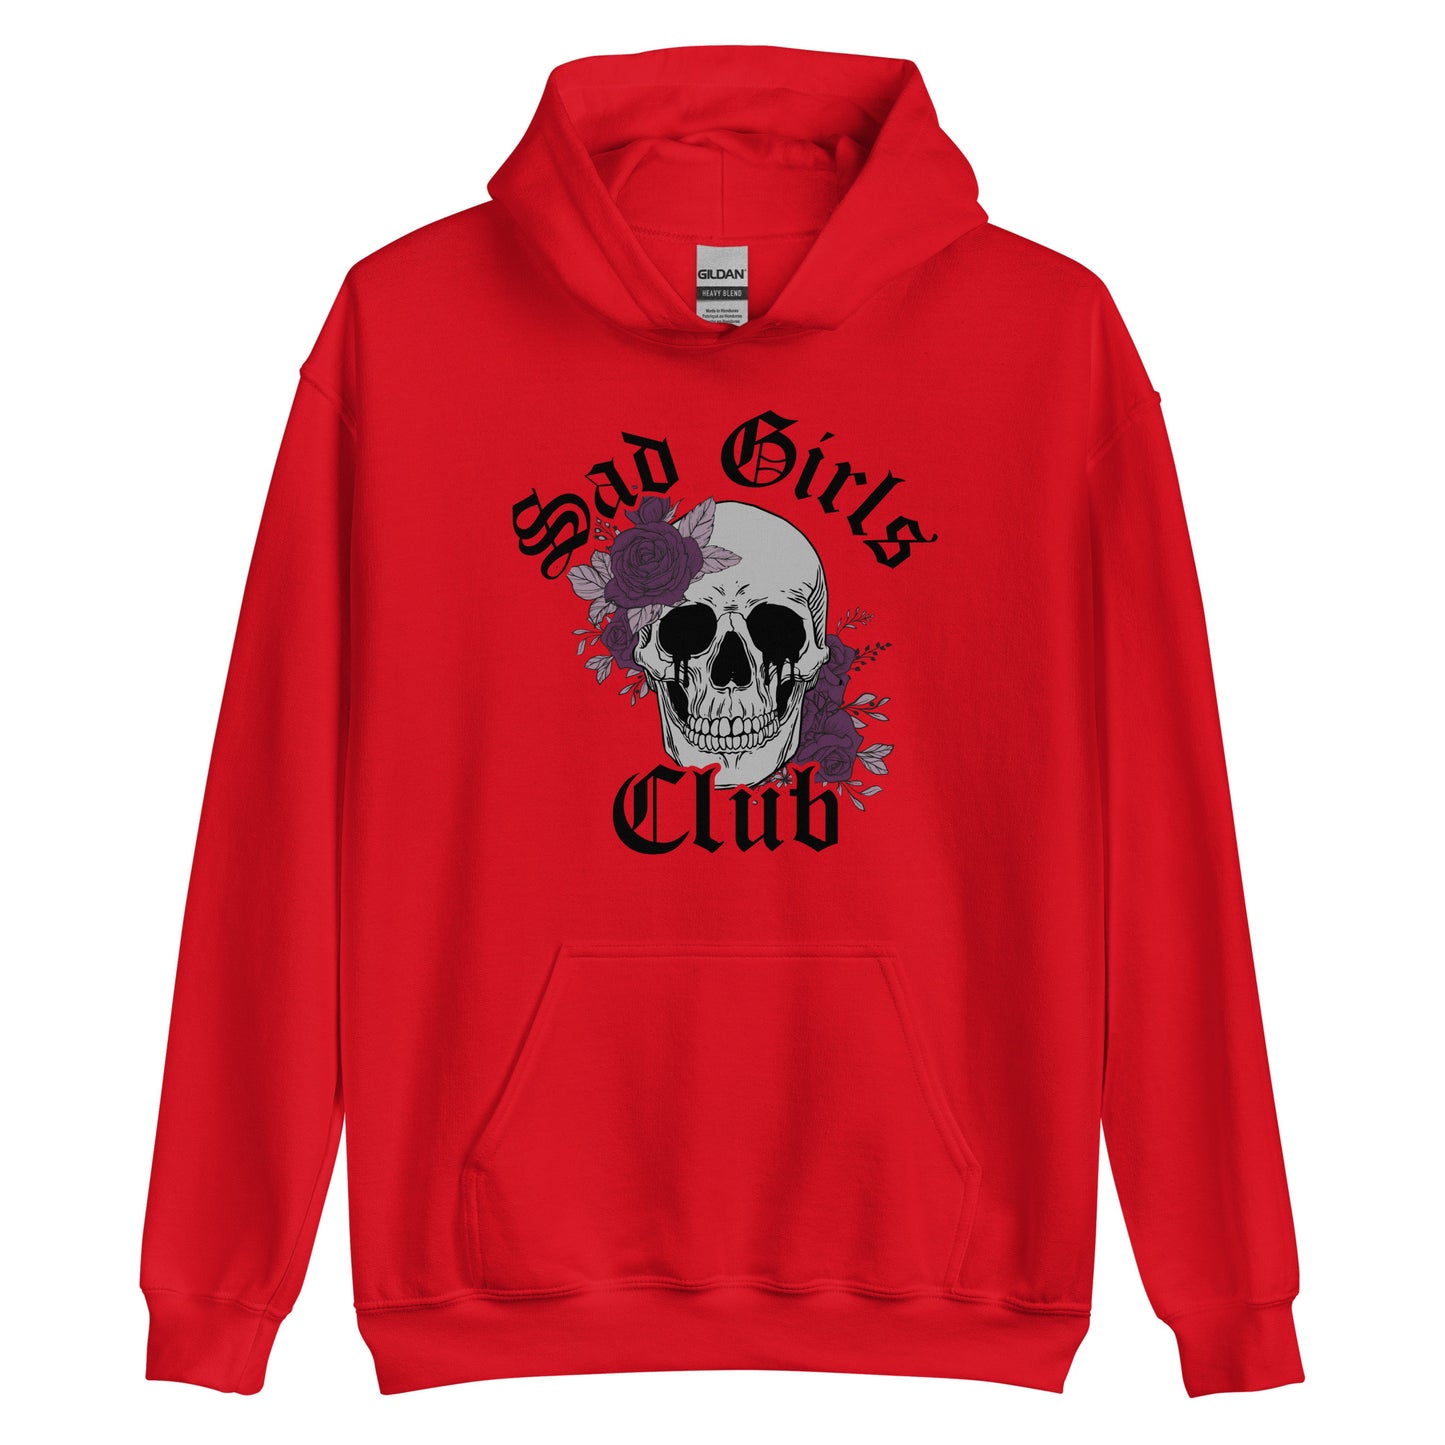 Sad Girls Club Hoodie red